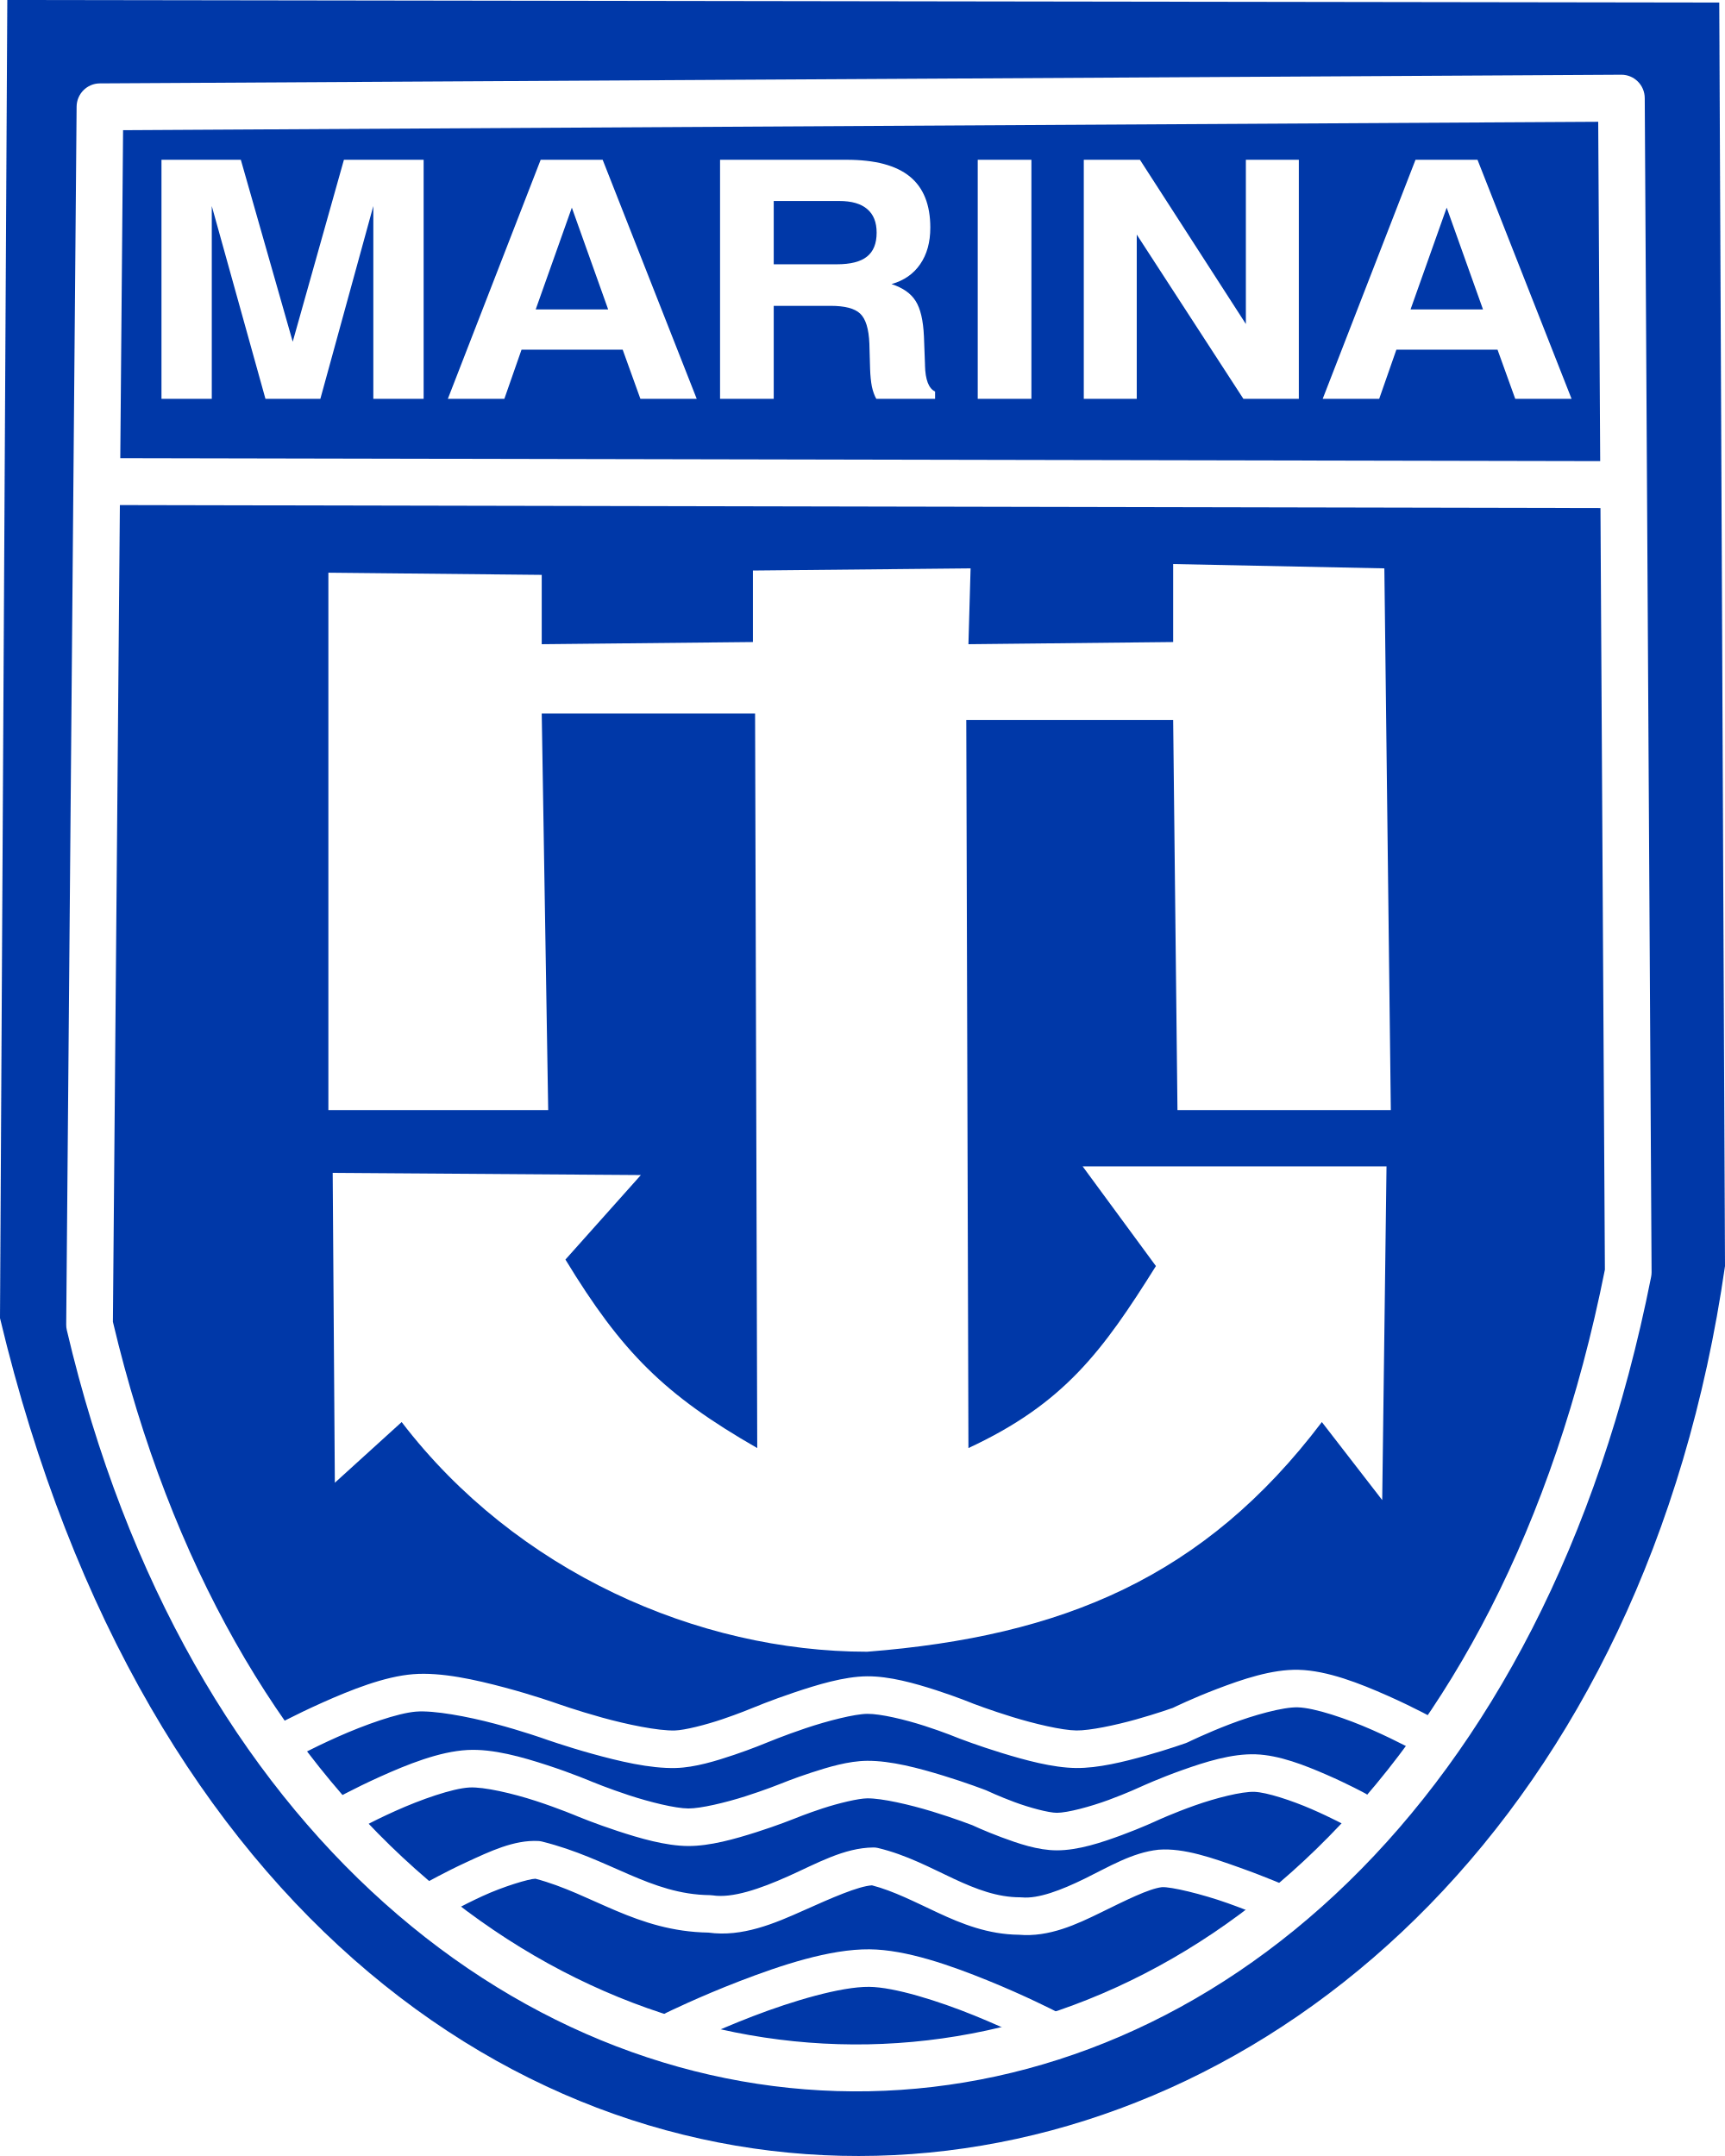 Marina Logo - Maritime Industry Authority